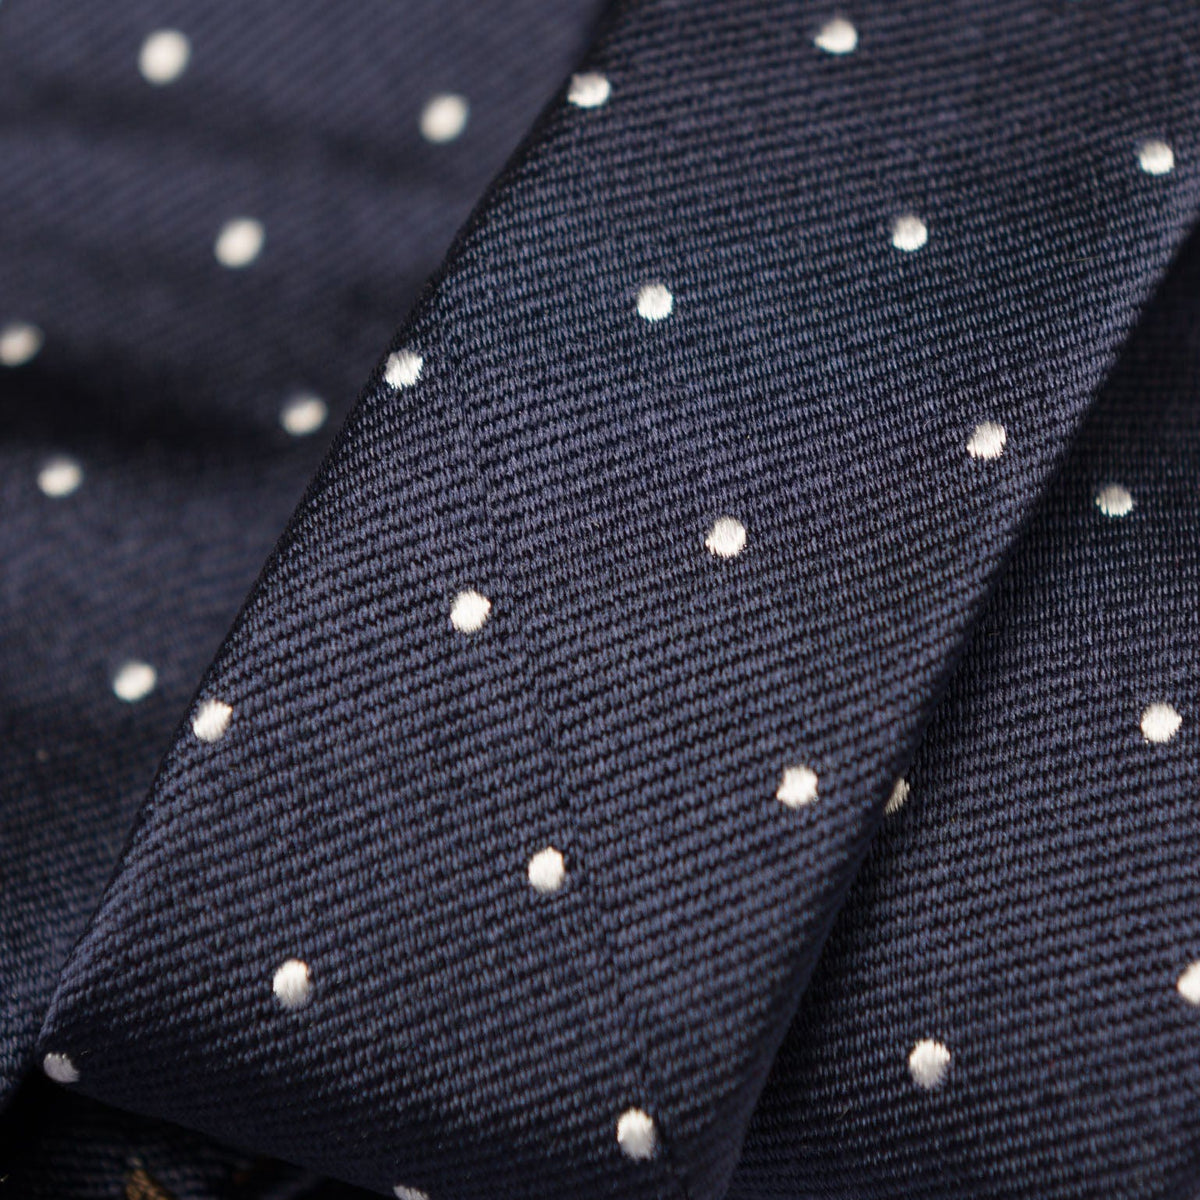 Navy Blue Italian Silk Tie - Polka Dots